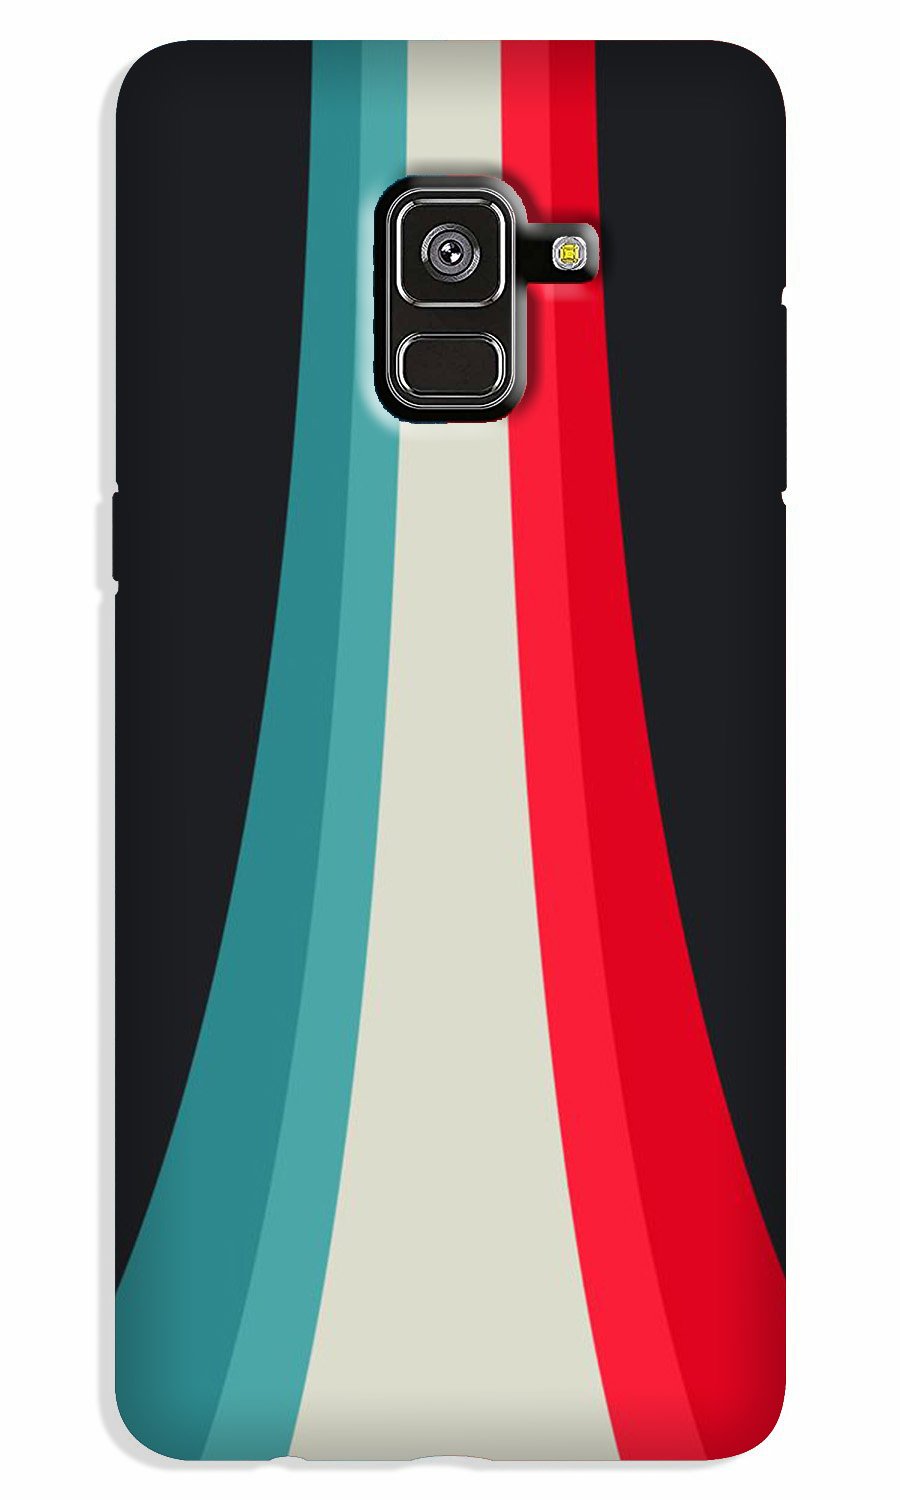 Slider Case for Galaxy A8 Plus (Design - 189)